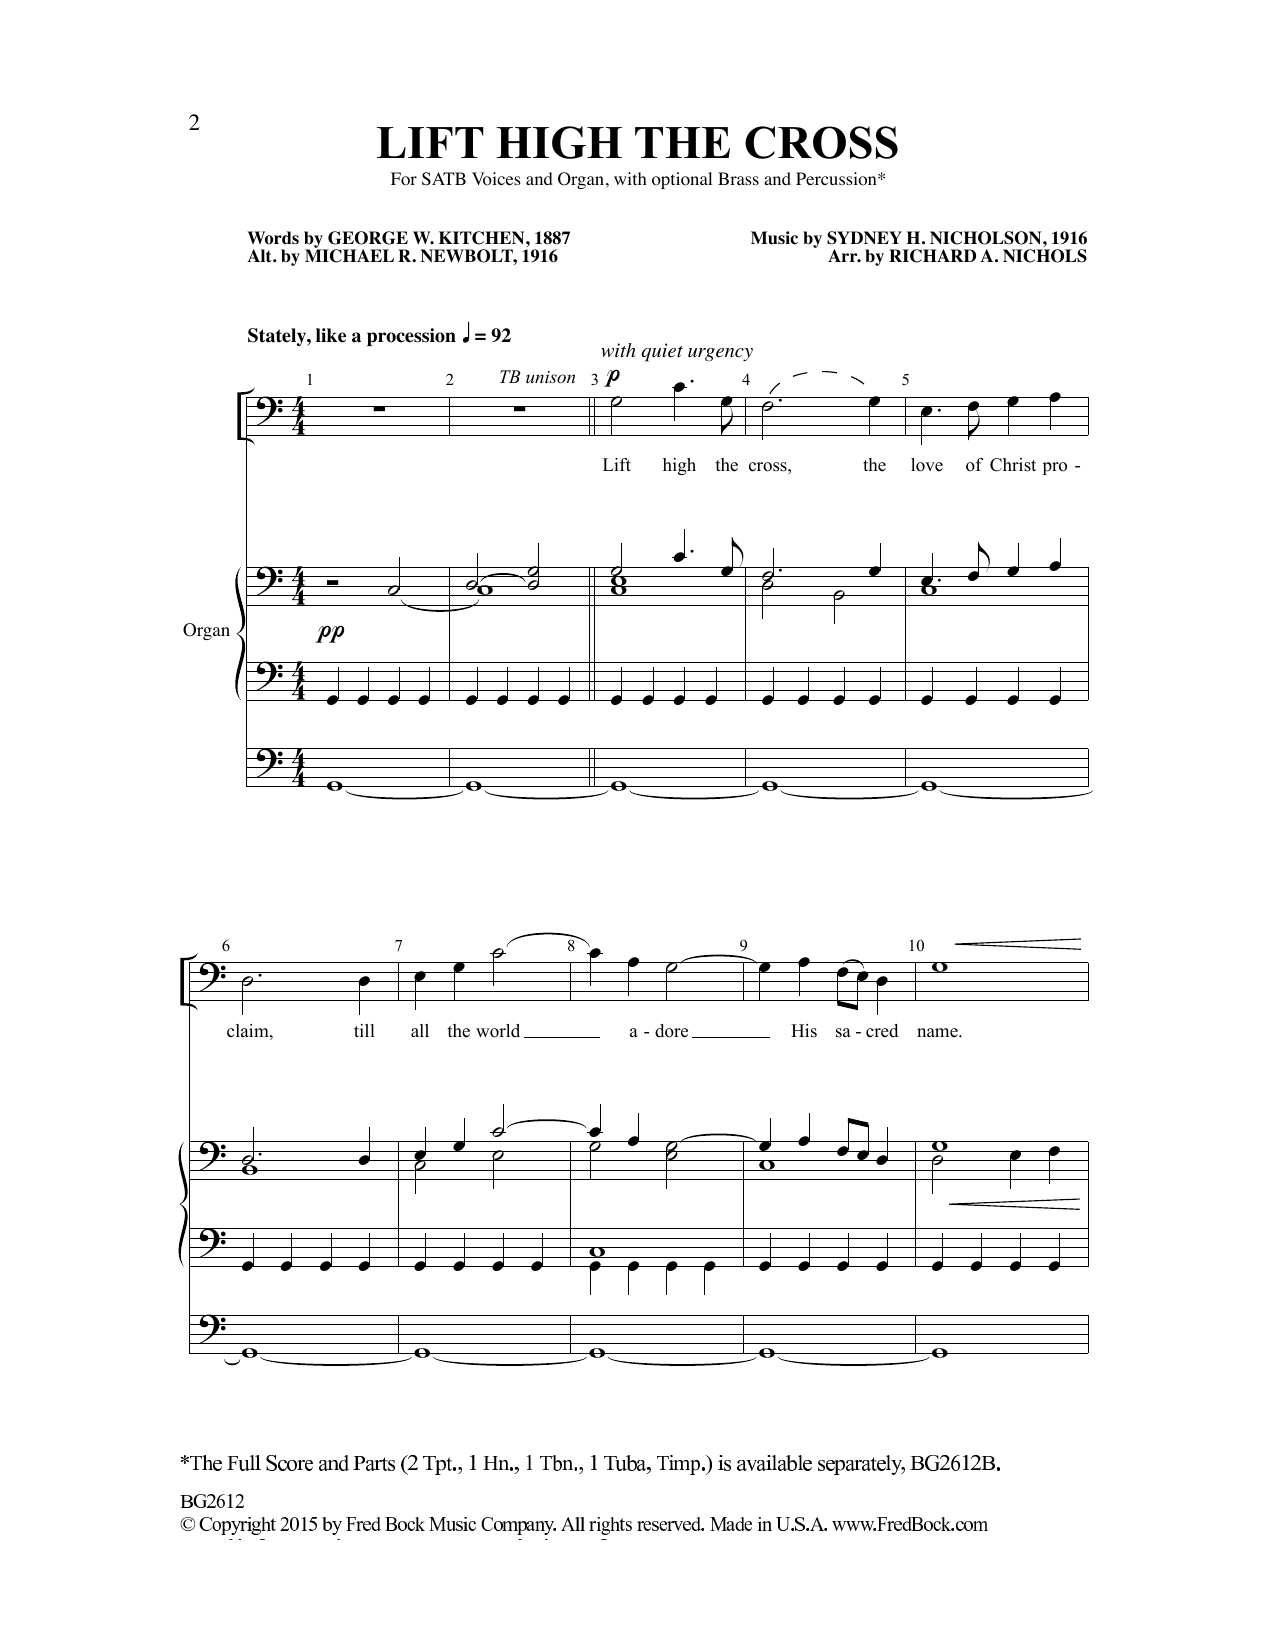 Richard A. Nichols Lift High The Cross sheet music notes and chords arranged for SATB Choir